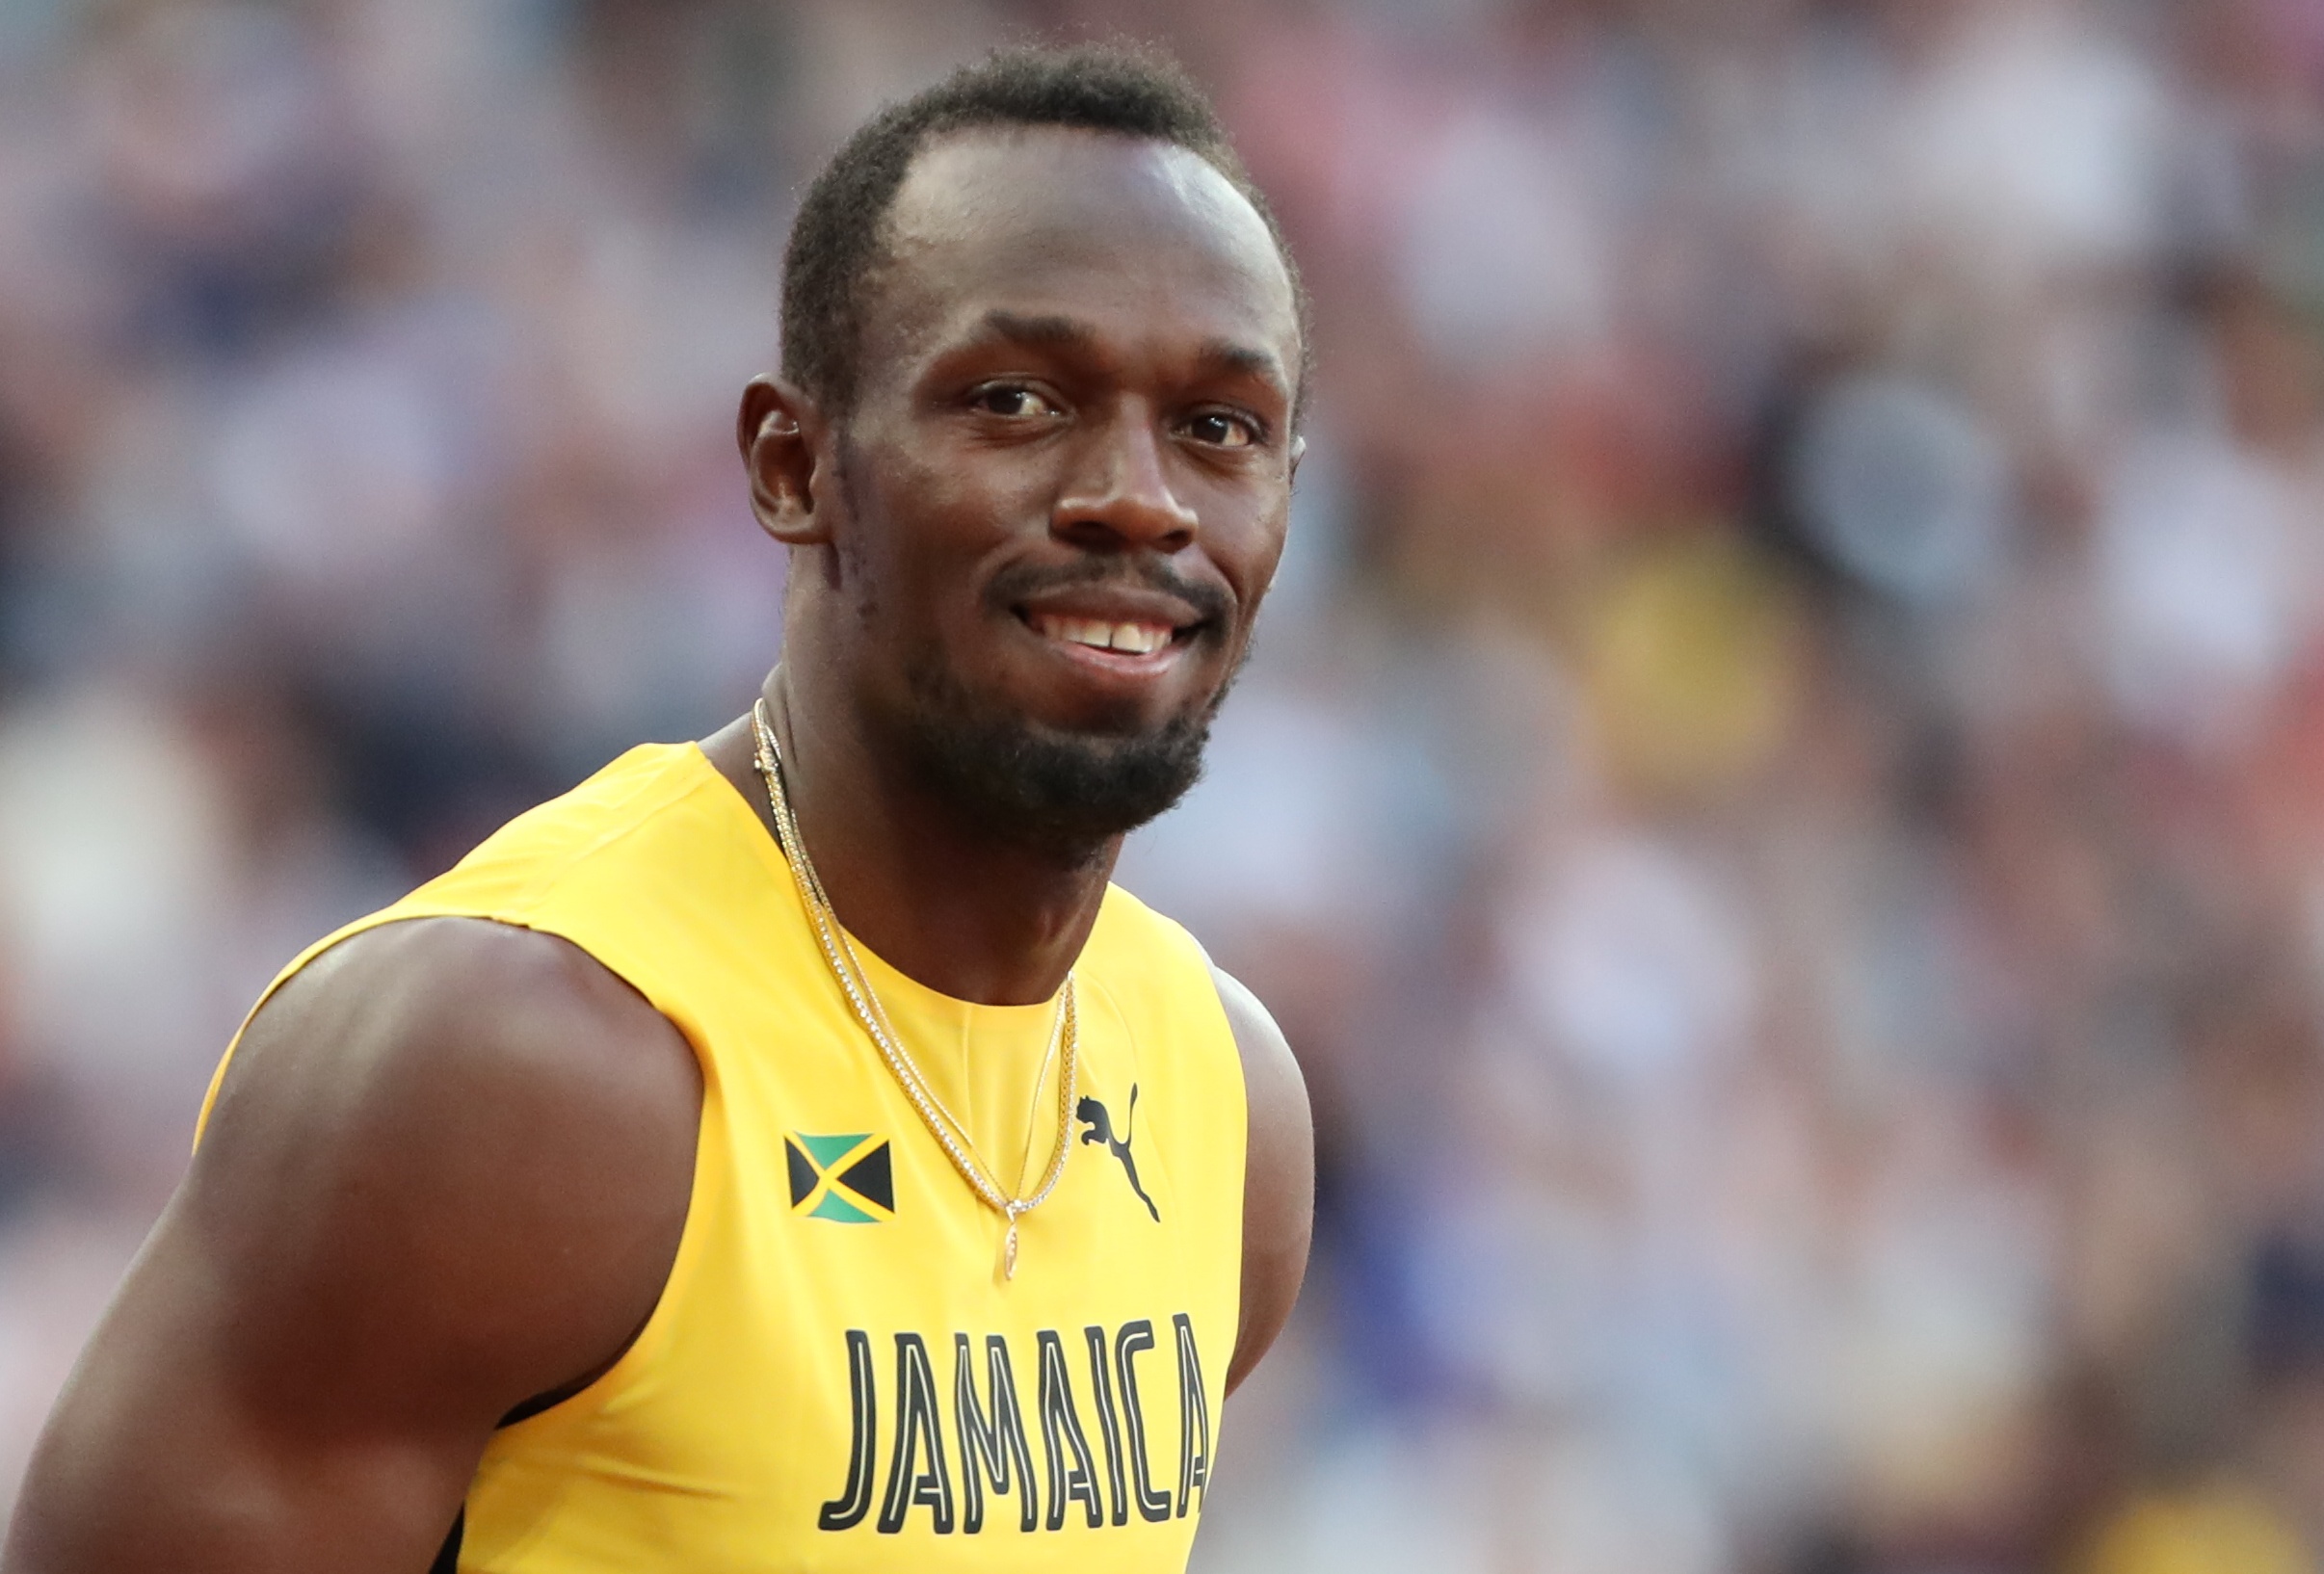 Usain Bolt, leyenda del atletismo, dio positivo por coronavirus